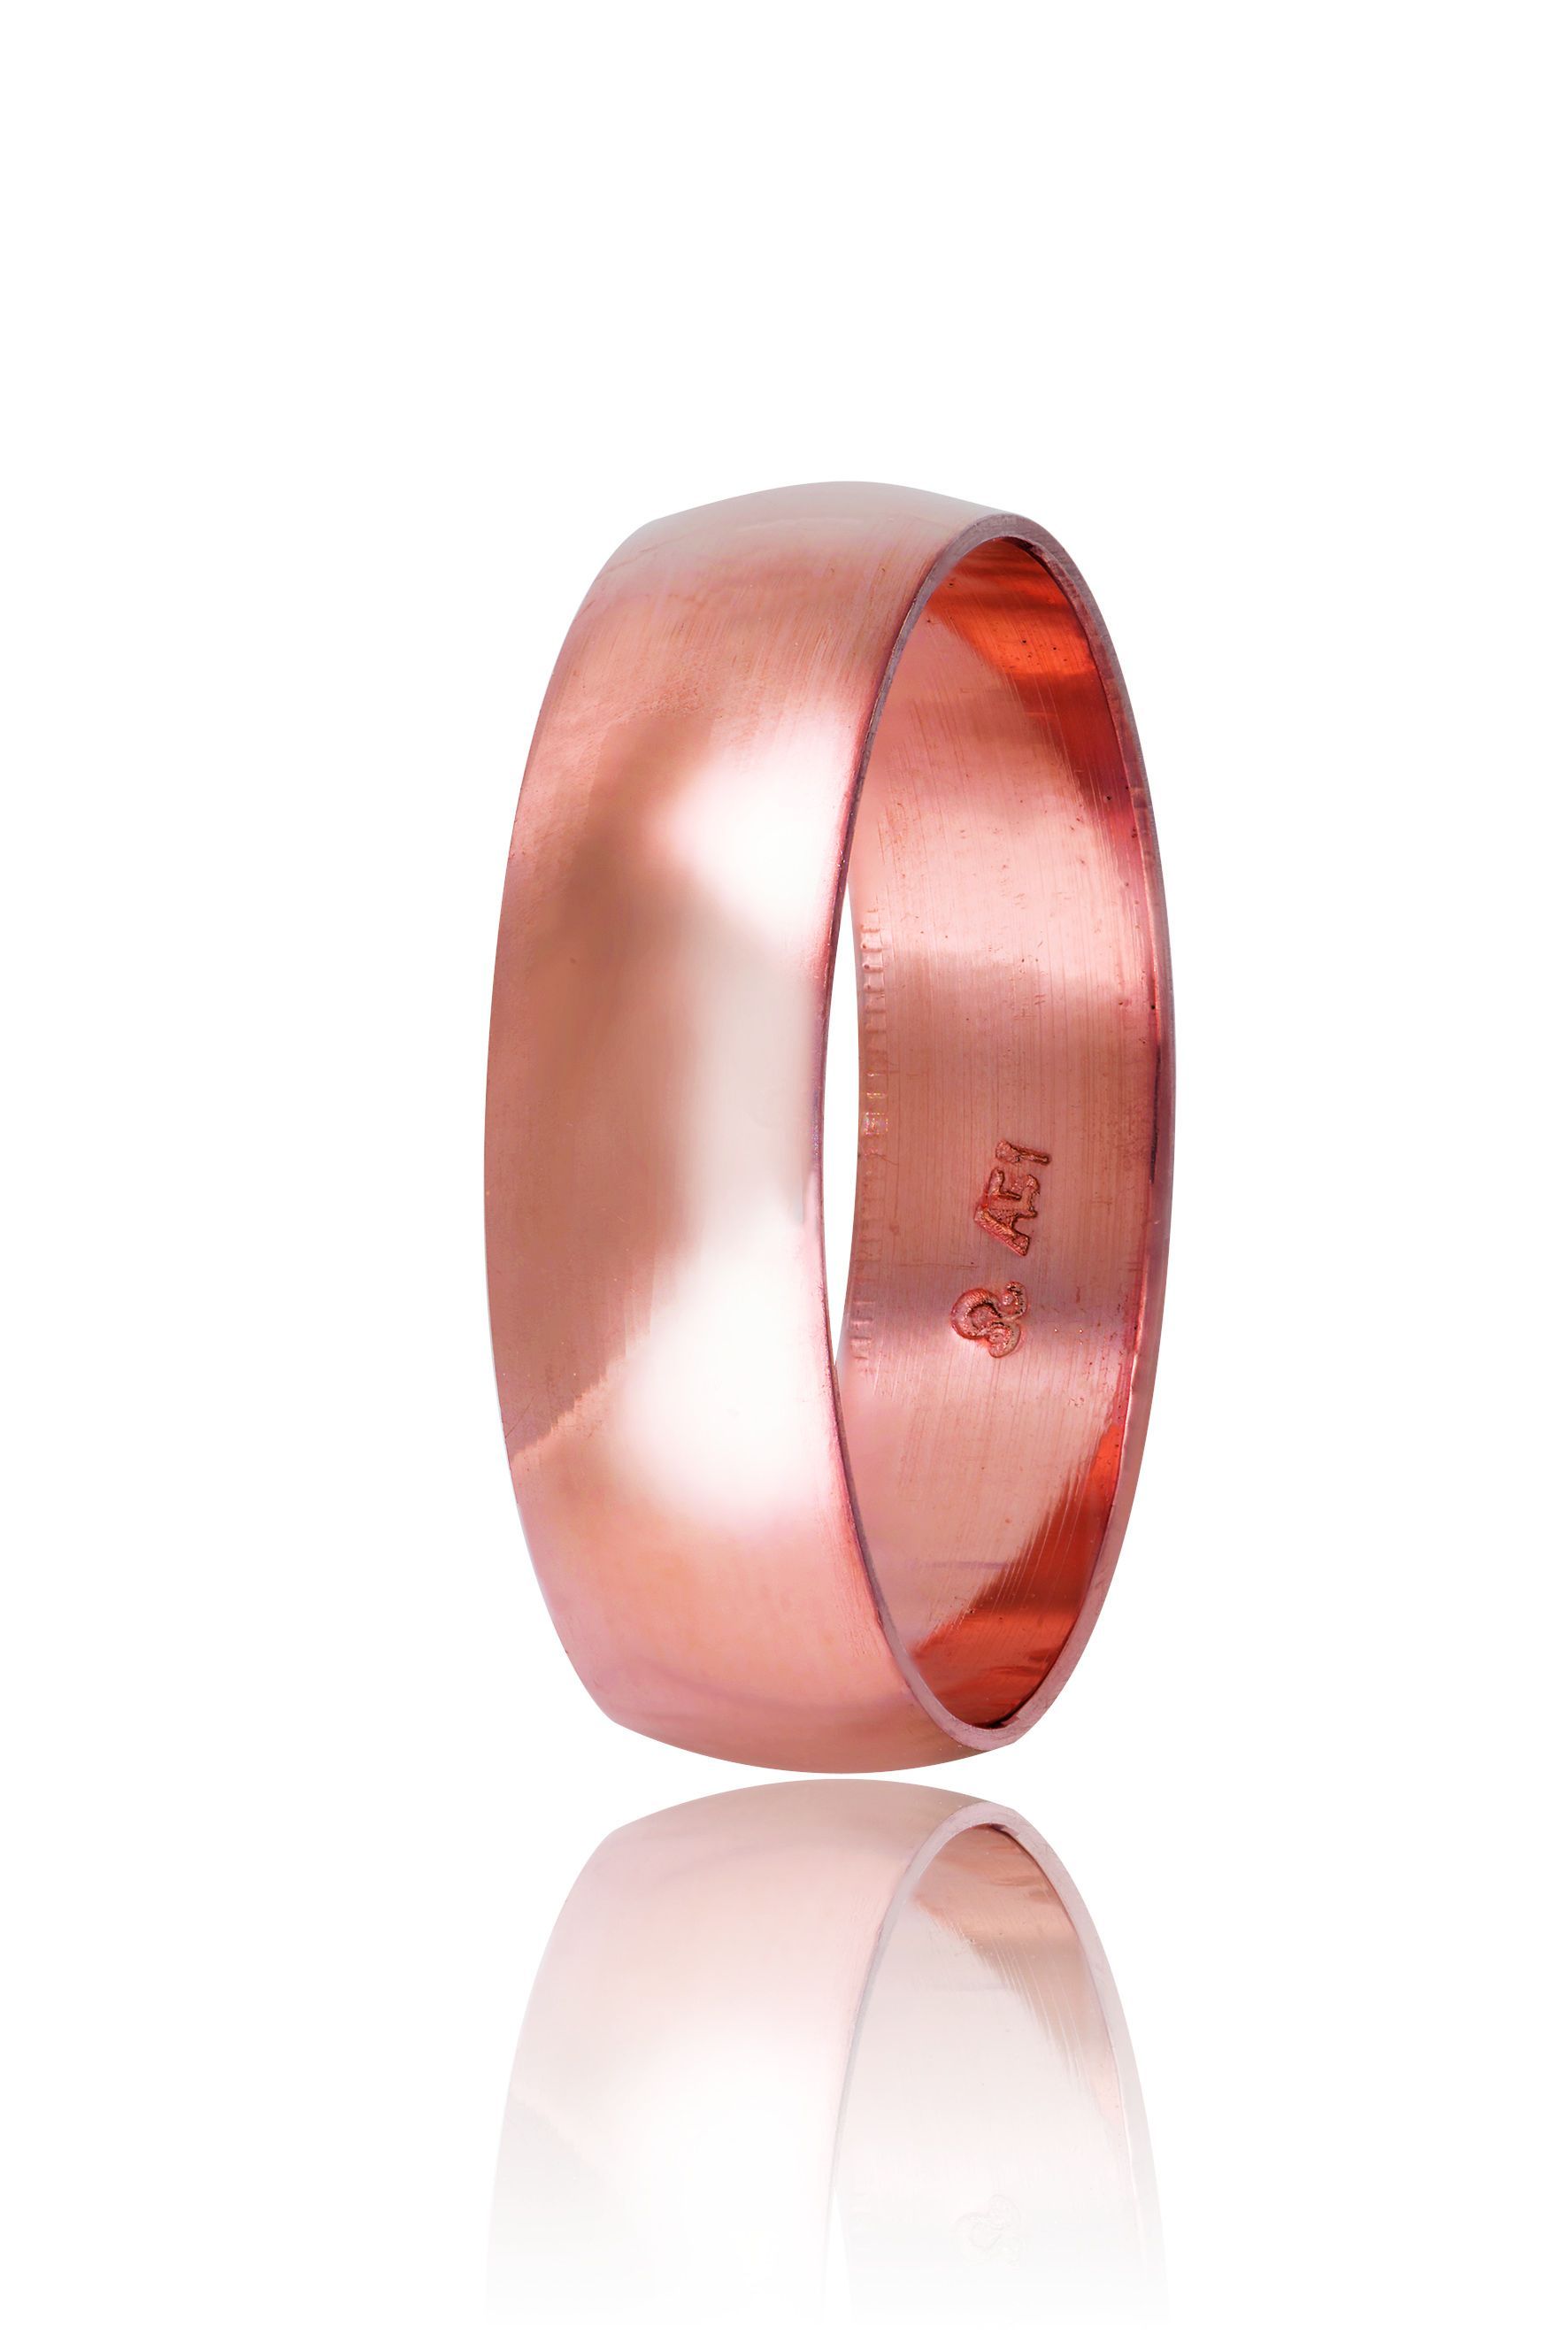 Rose gold wedding rings 6mm (code HR4Ar).